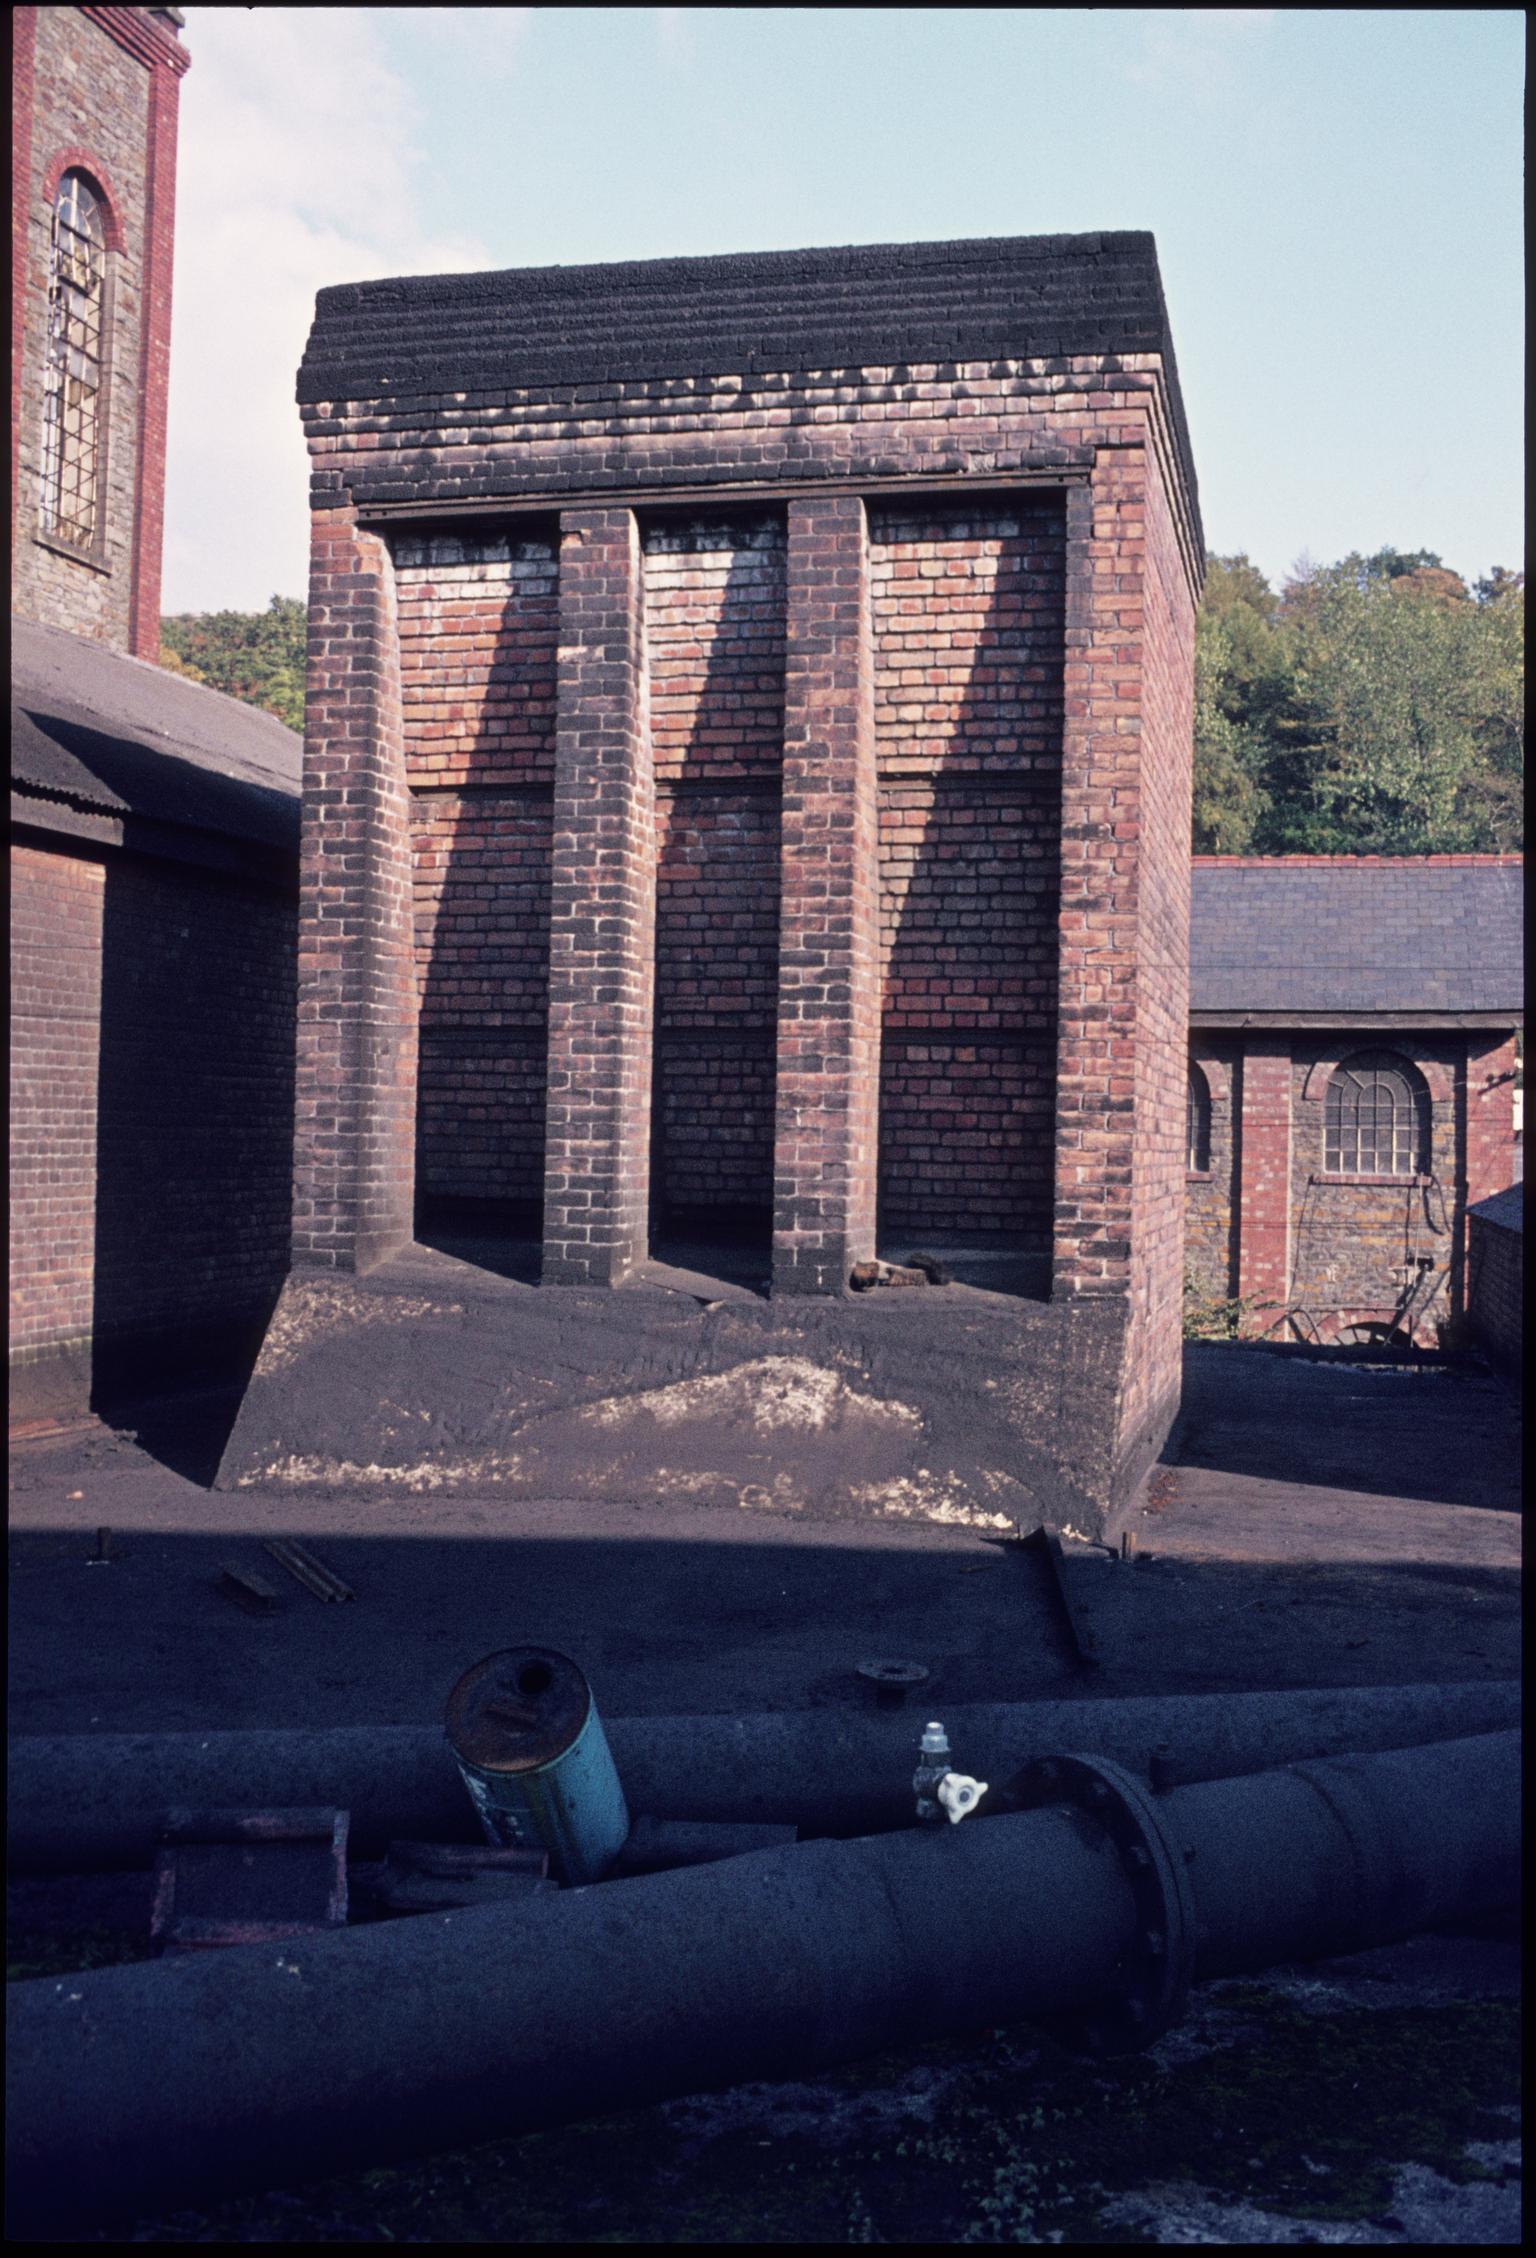 Celynen North Colliery, film slide